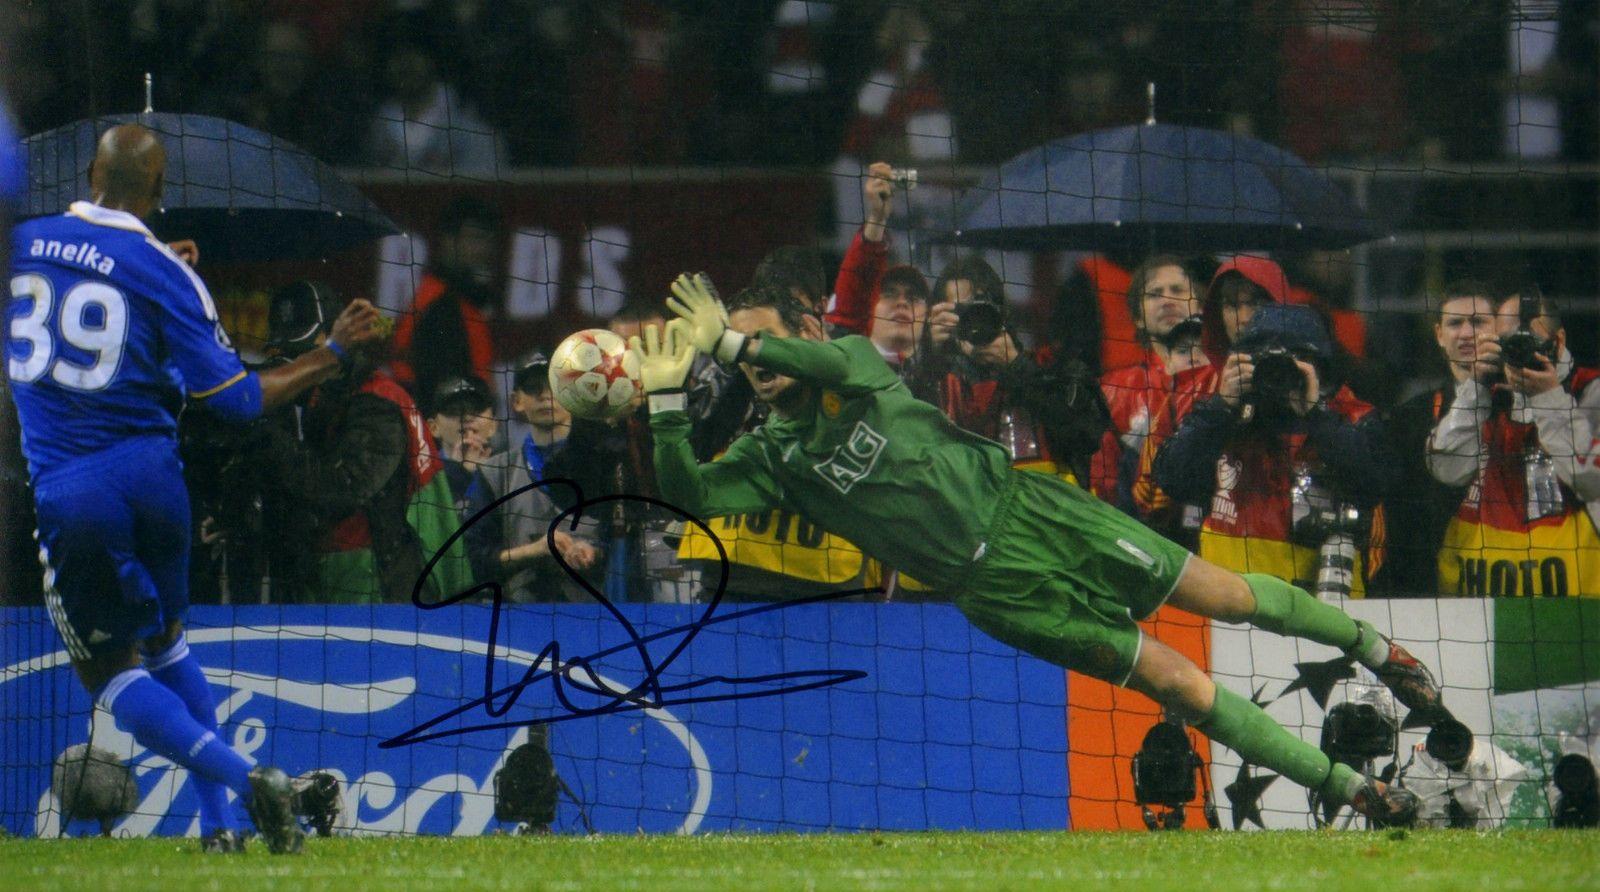 Signed Edwin Van Der Sar Manchester United 2008 Champions League